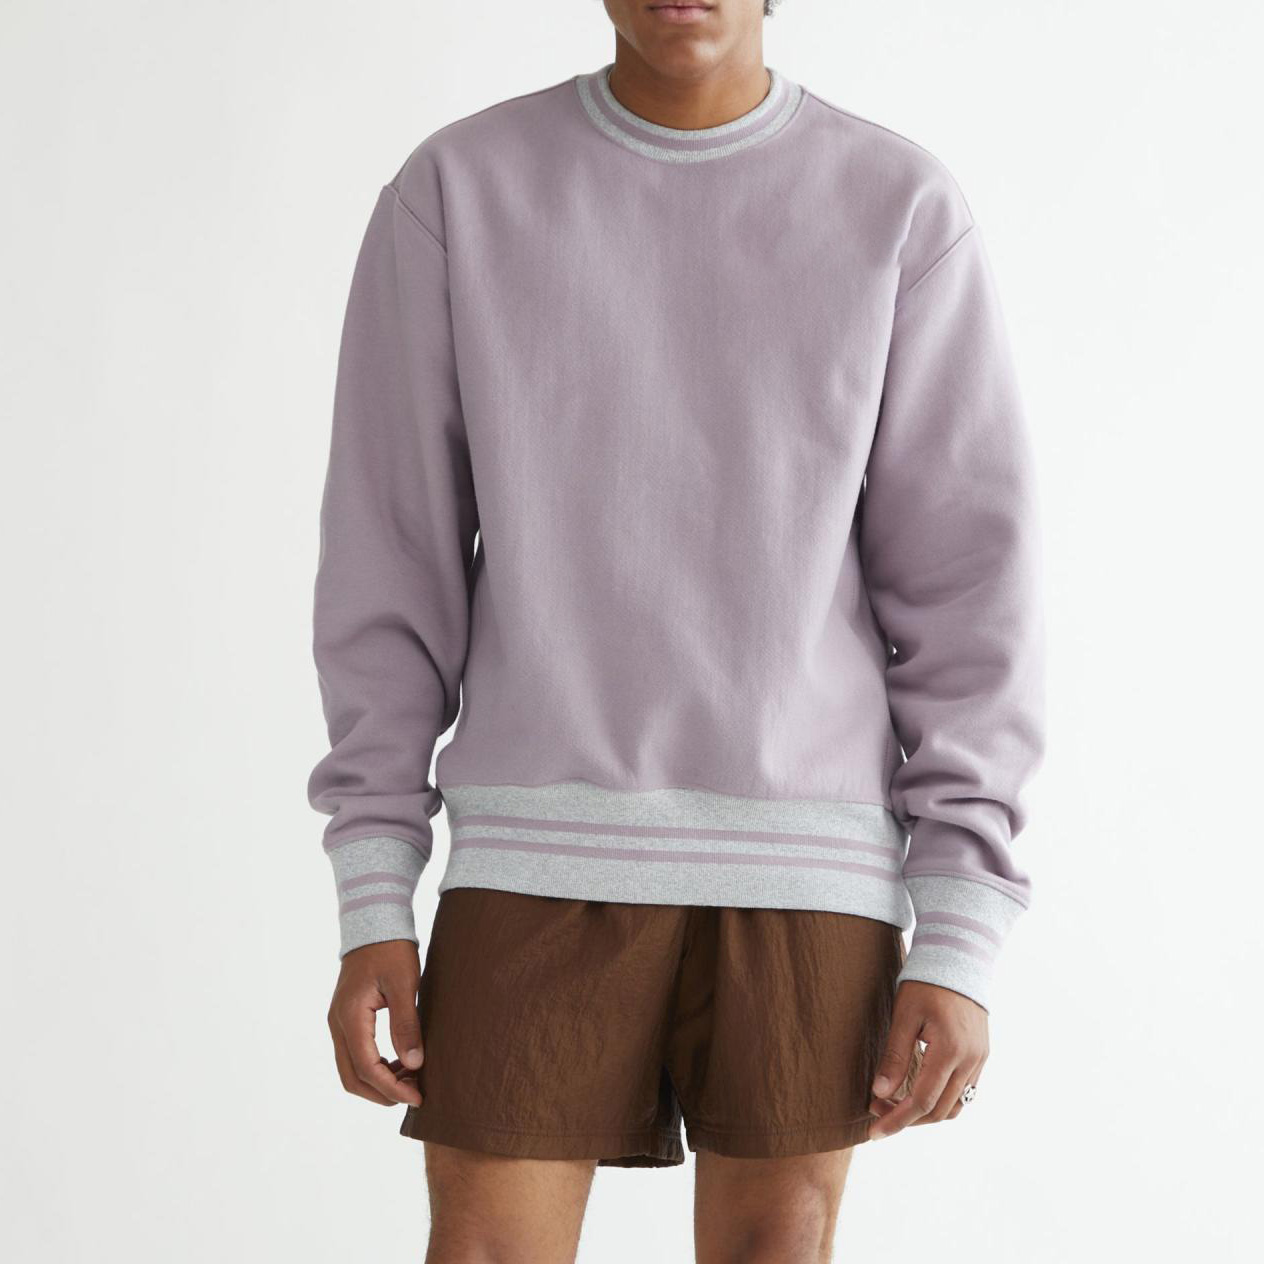 Wholesale Price Sweatshirts With Striped Cuff